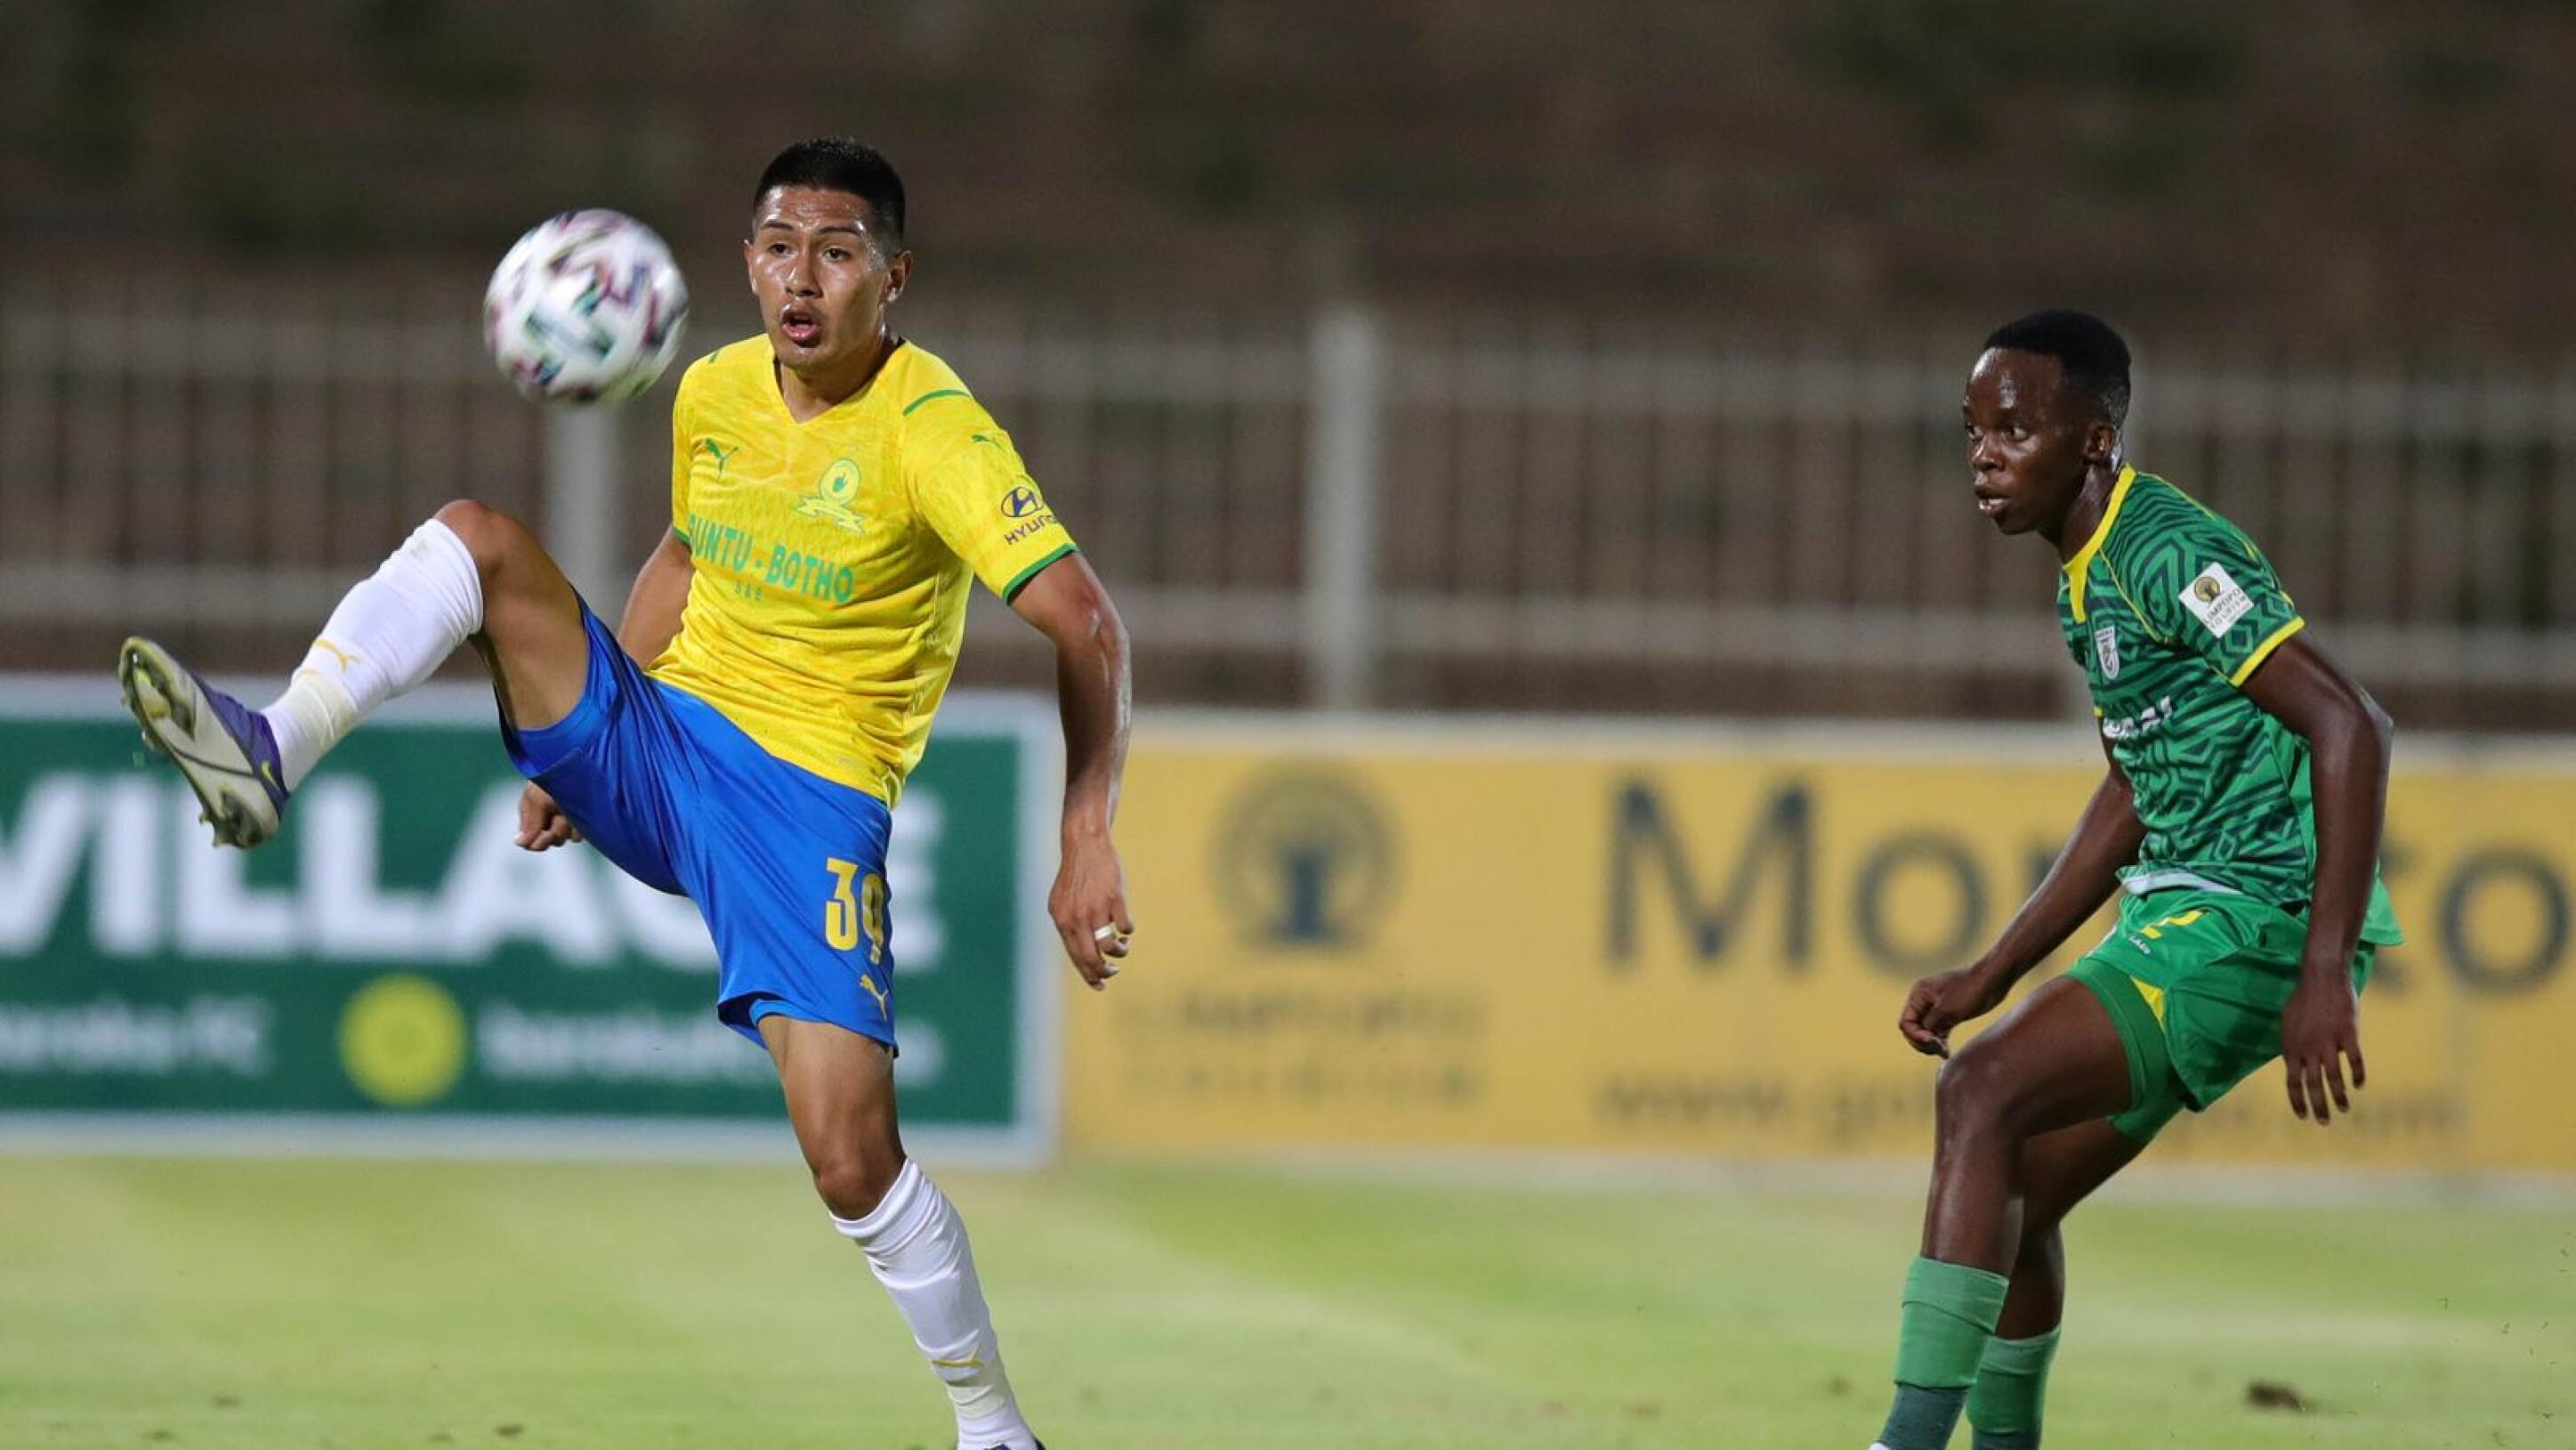 Erwin Saavedra of Mamelodi Sundowns is challenged by Basel Mphahlele of Baroka during the DStv Premiership match at Old Peter Mokaba Stadium in Polokwane, Limpopo on Monday